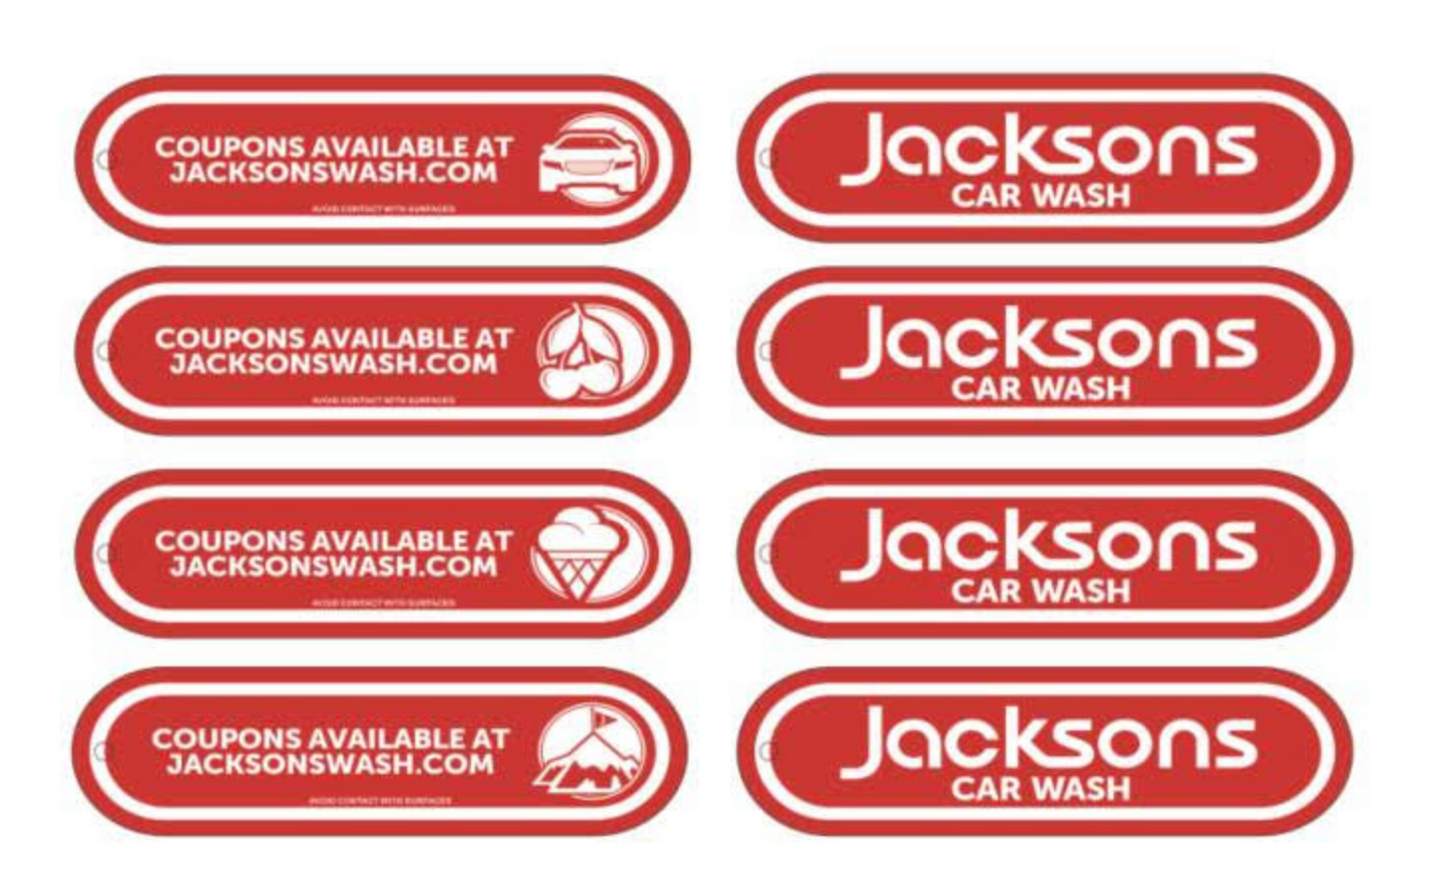 Jacksons Car Wash